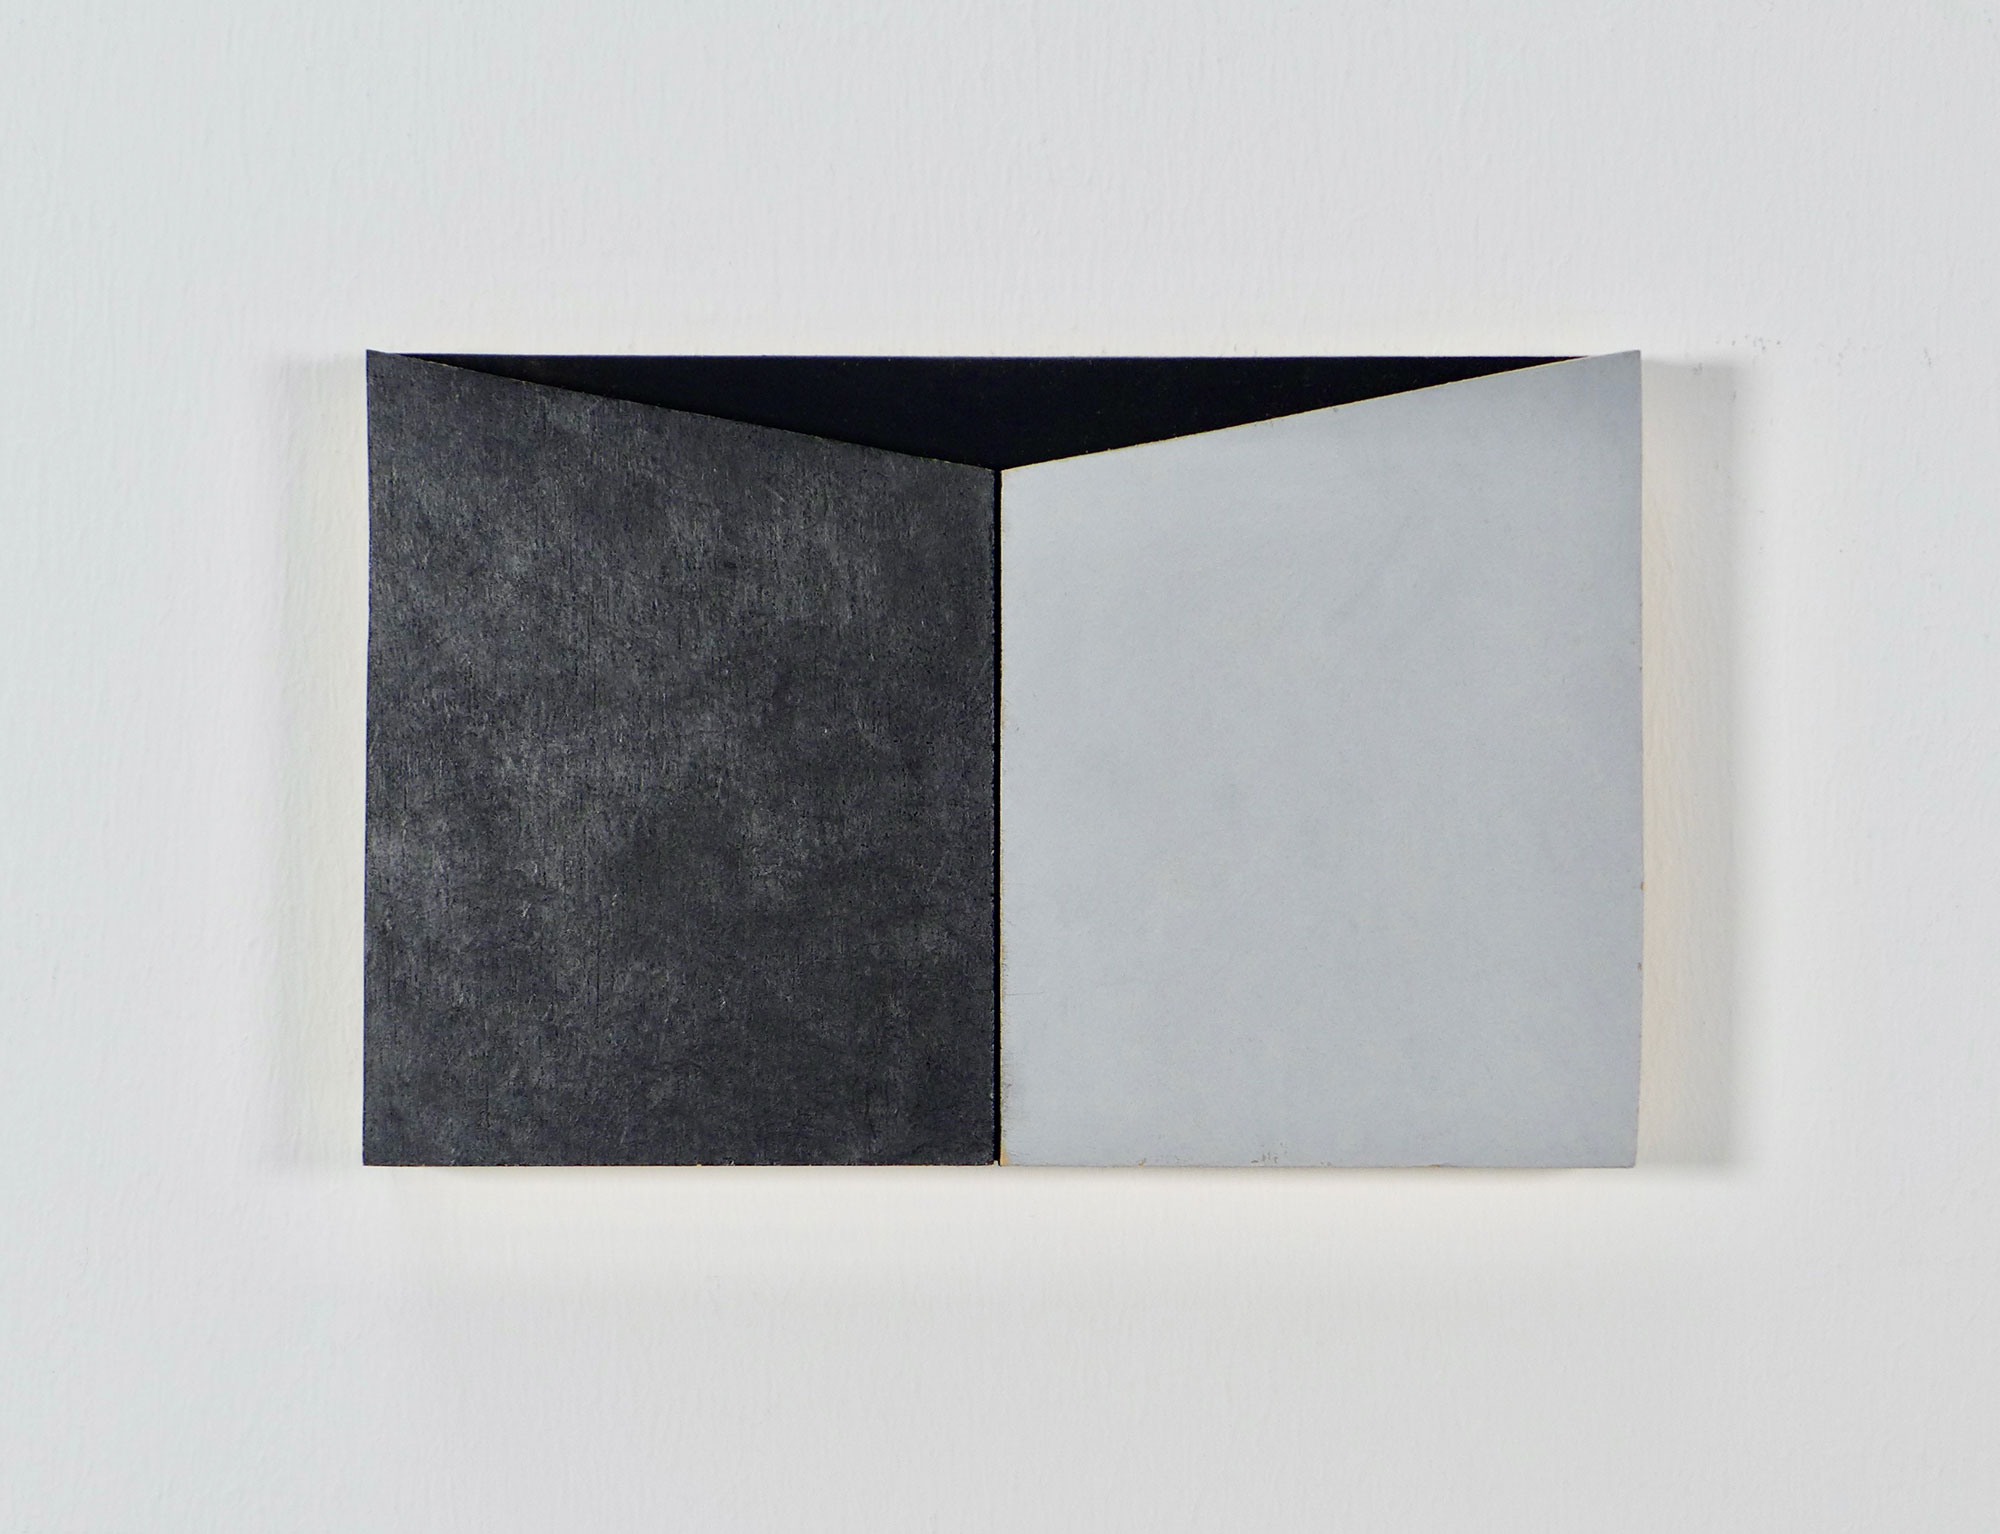 Kenneth Dingwall, Accord I, 2012, graphite and casein on wood, 13cm x 20cm x 2cm